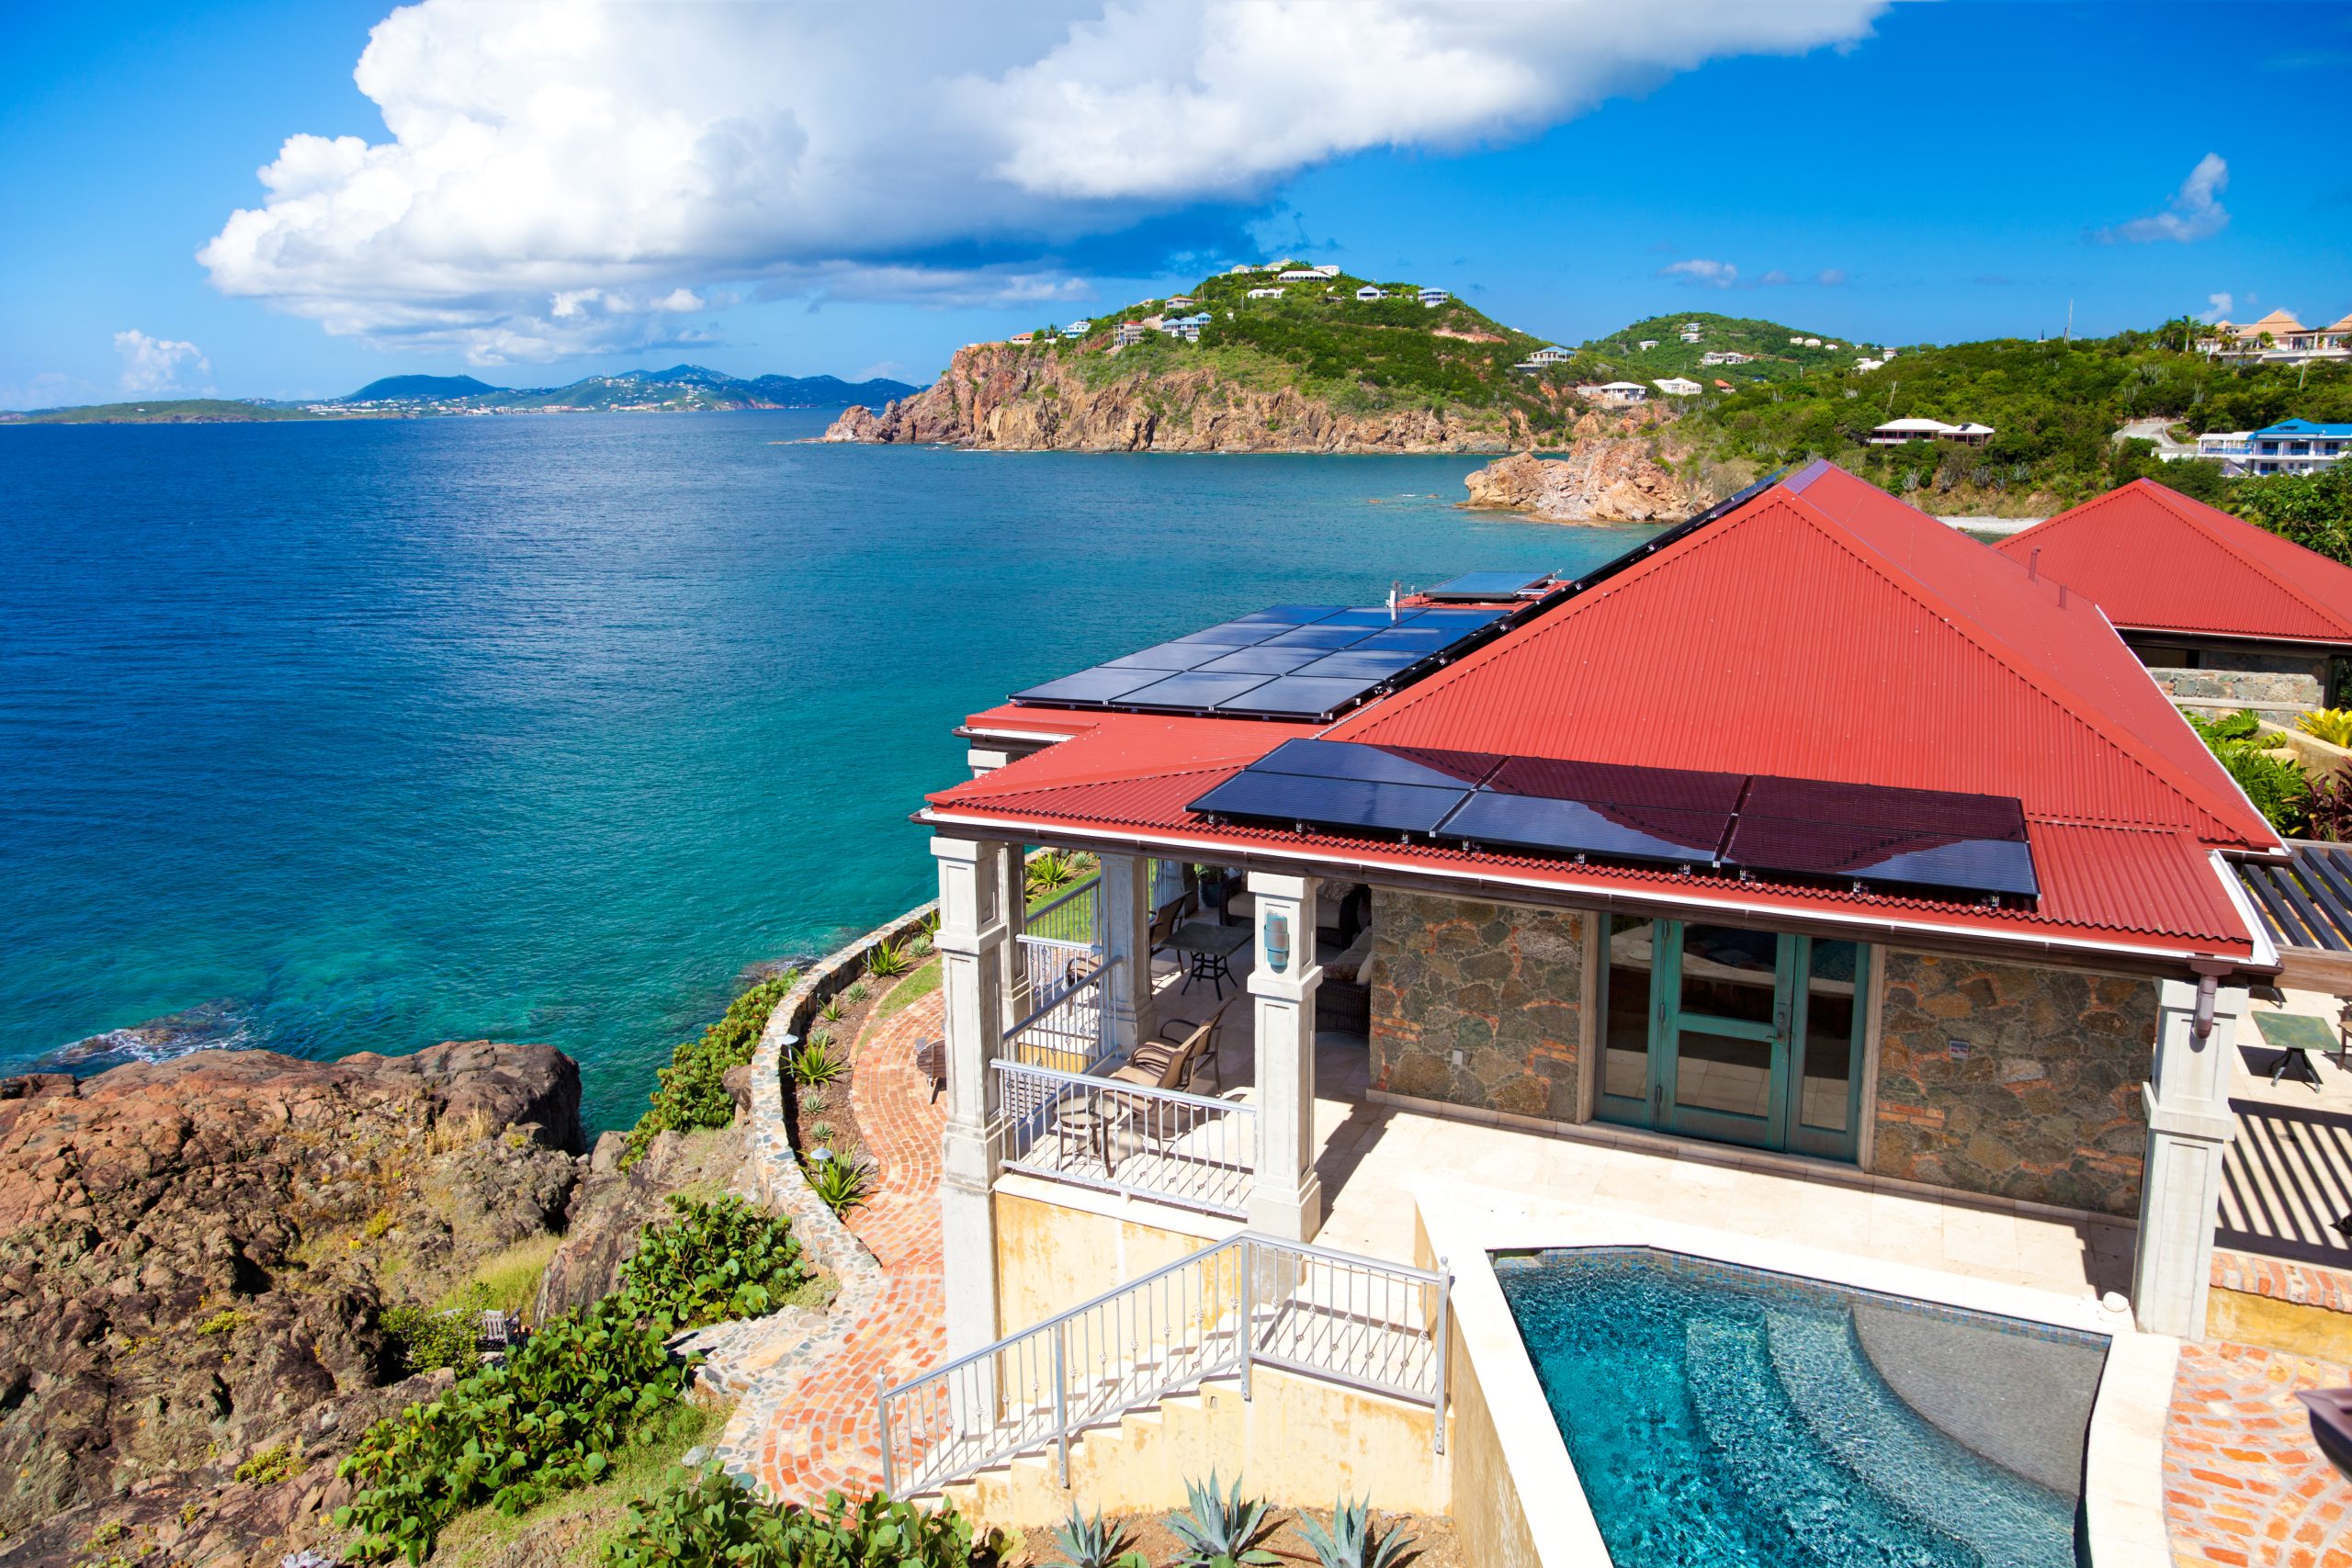 luxury Caribbean villa with alternative energy photovoltaic solar panels on roof